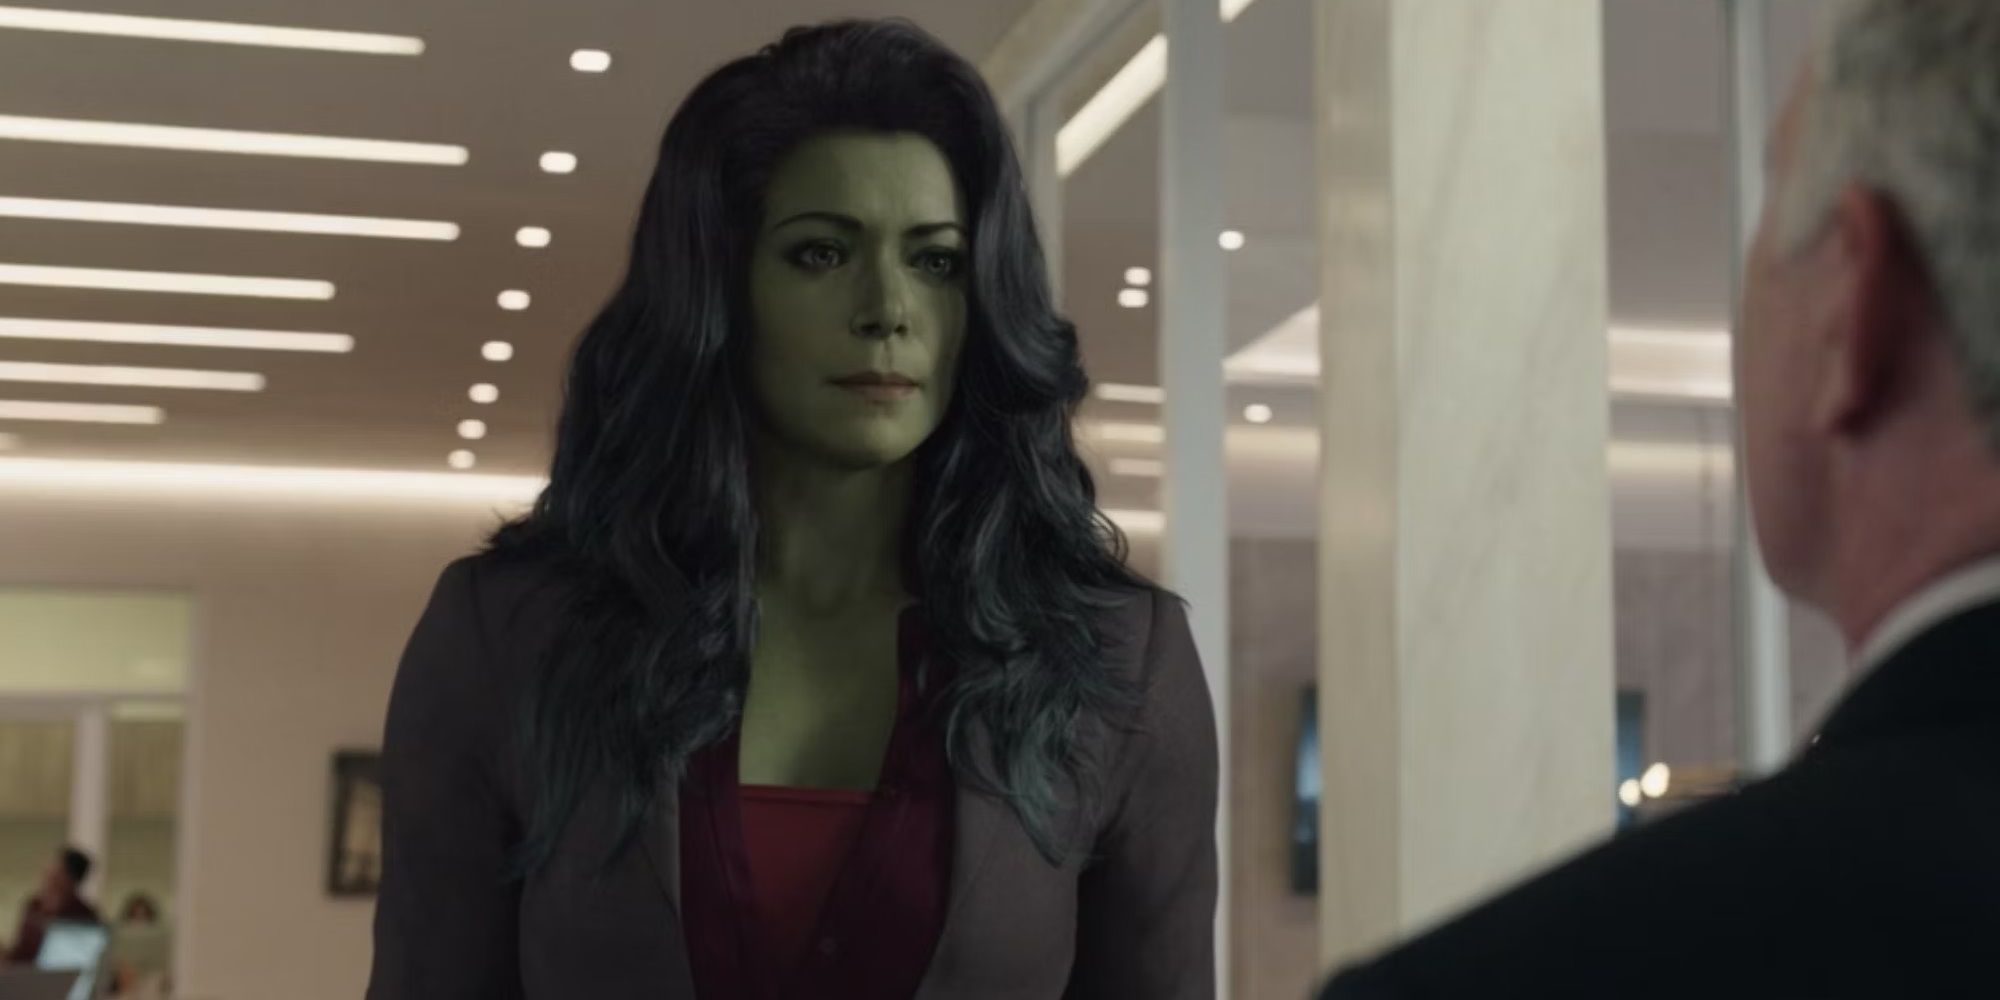 Jen arrives at her new office in She-Hulk